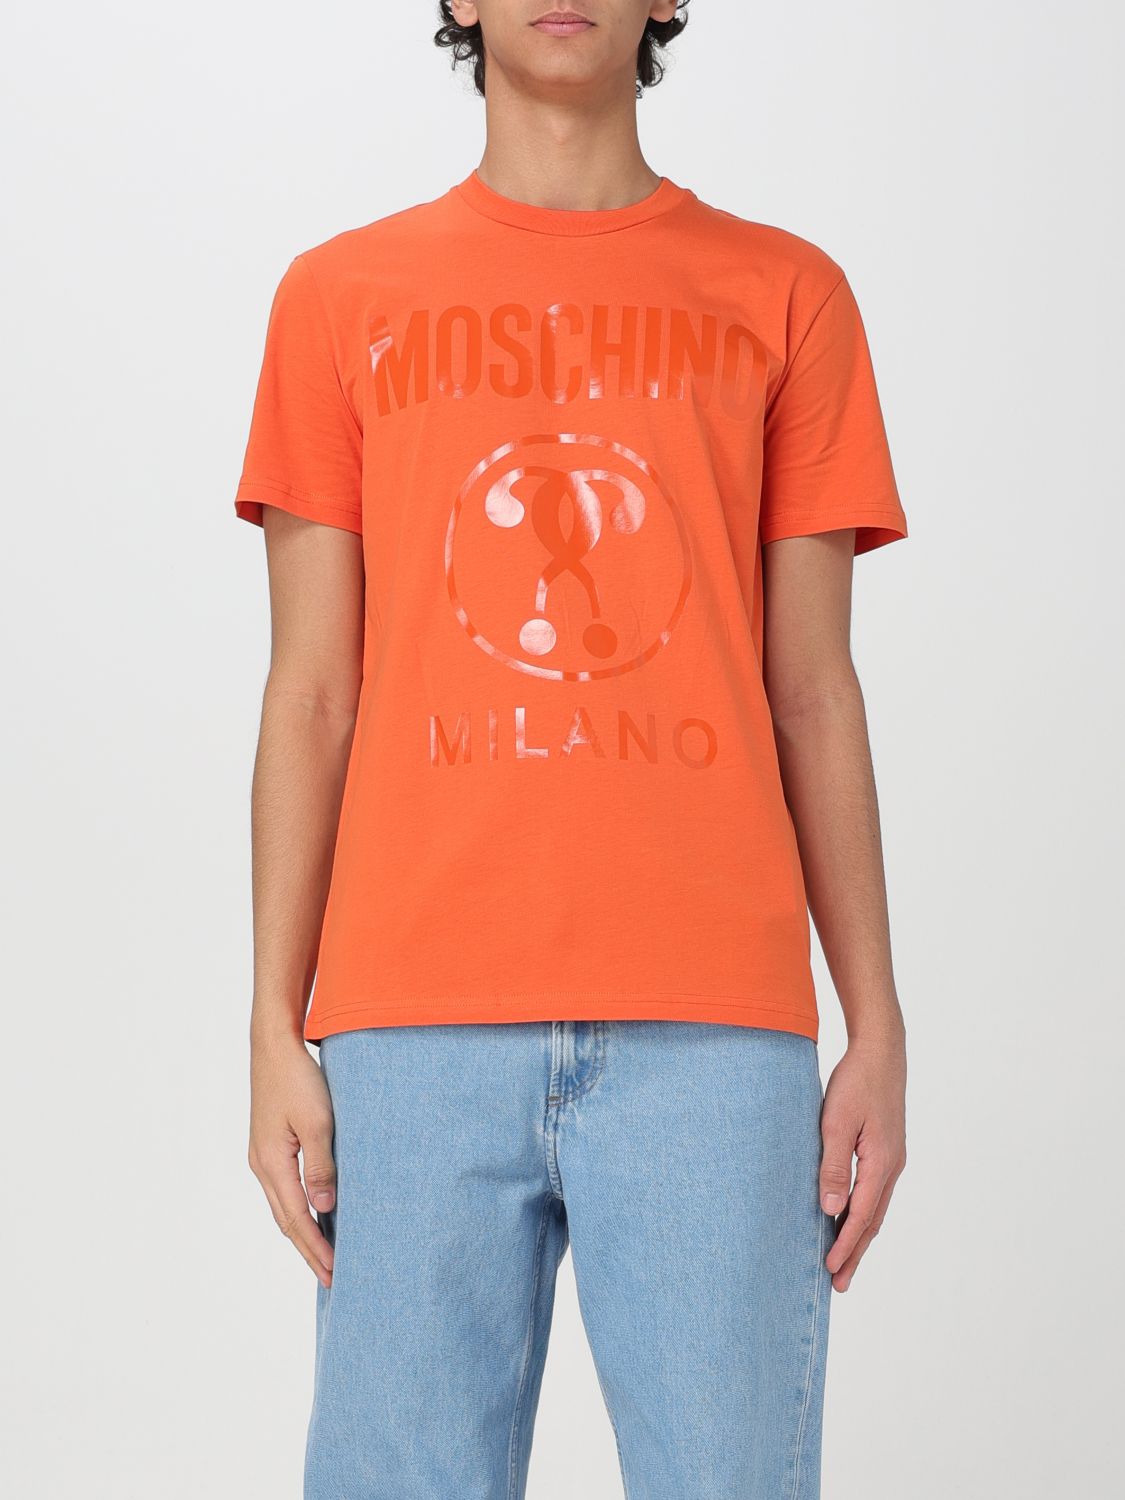 Moschino Couture T-shirt  Men Color Orange